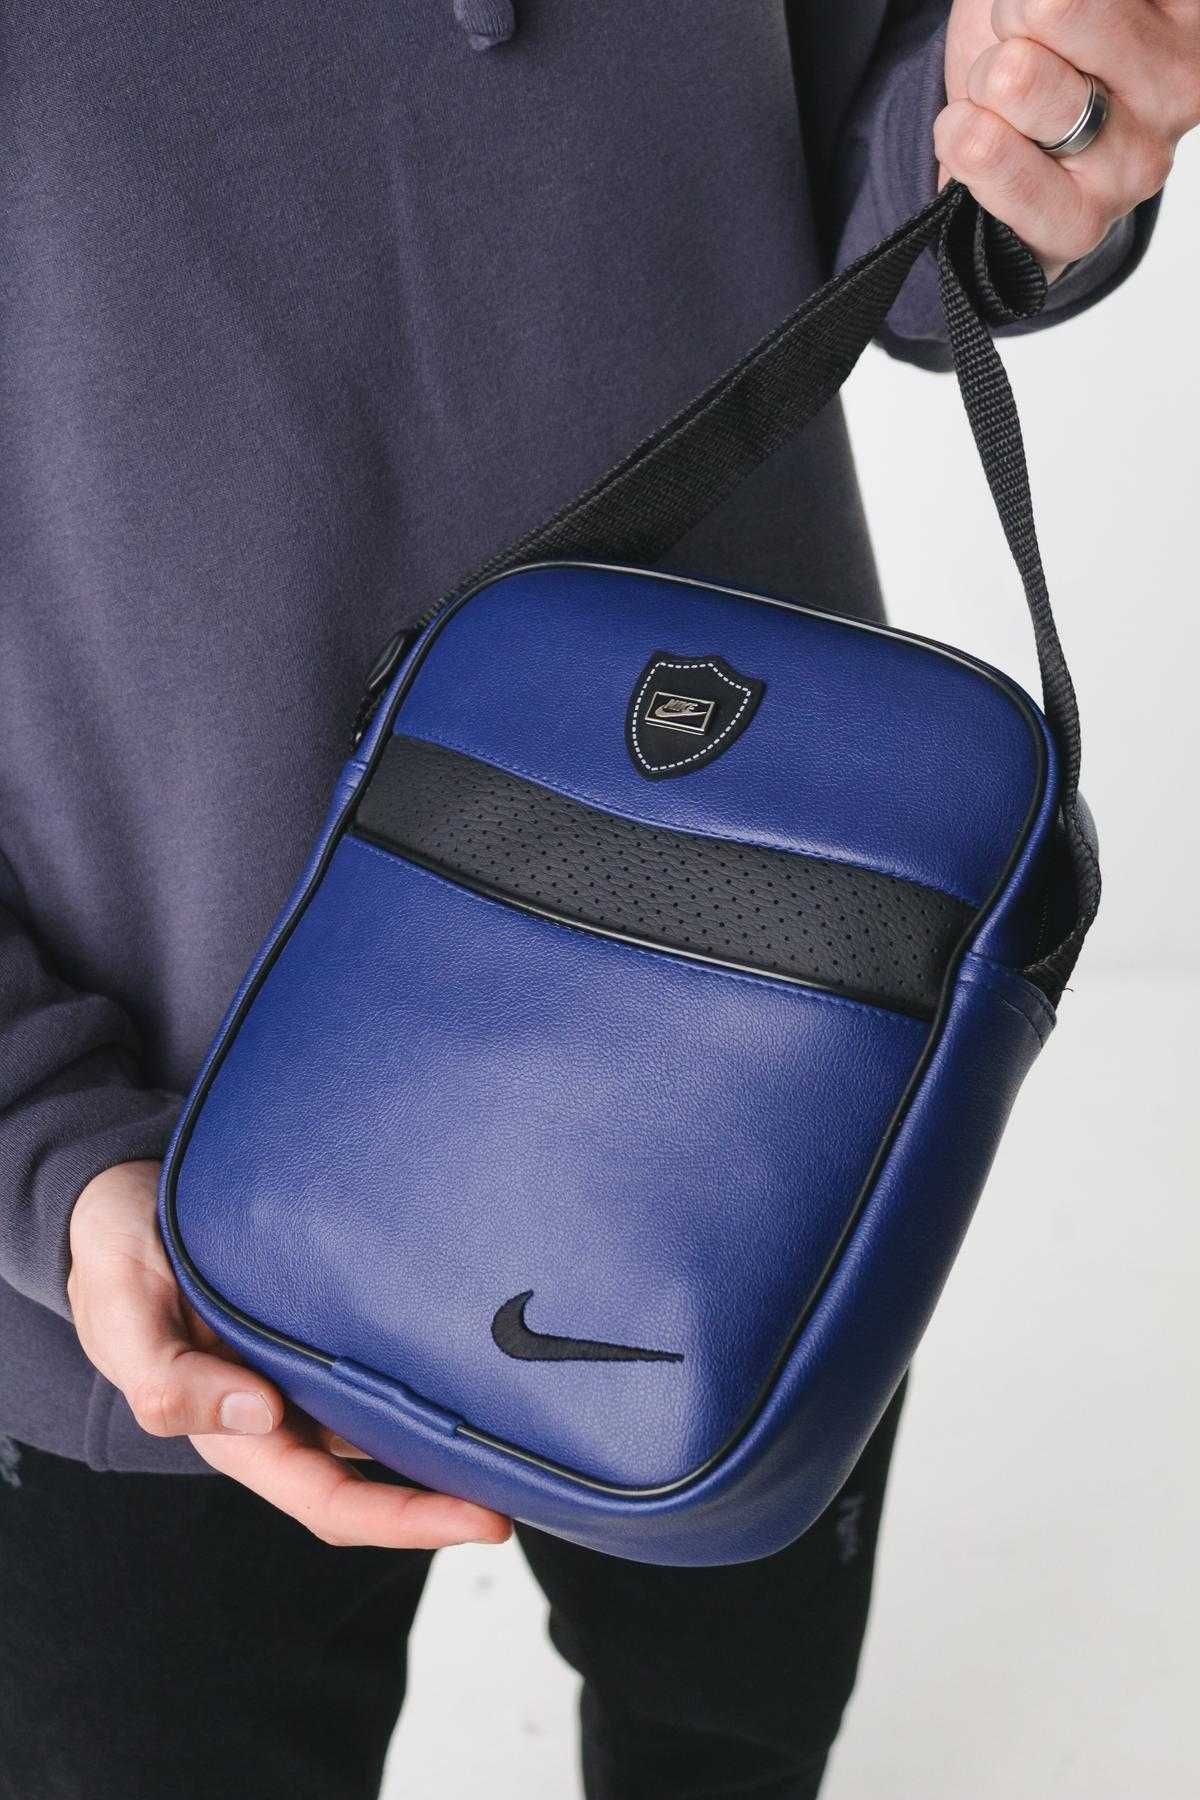 Барсетка Nike синя, сумка чоловіча найк, барсетка найк, месенджер